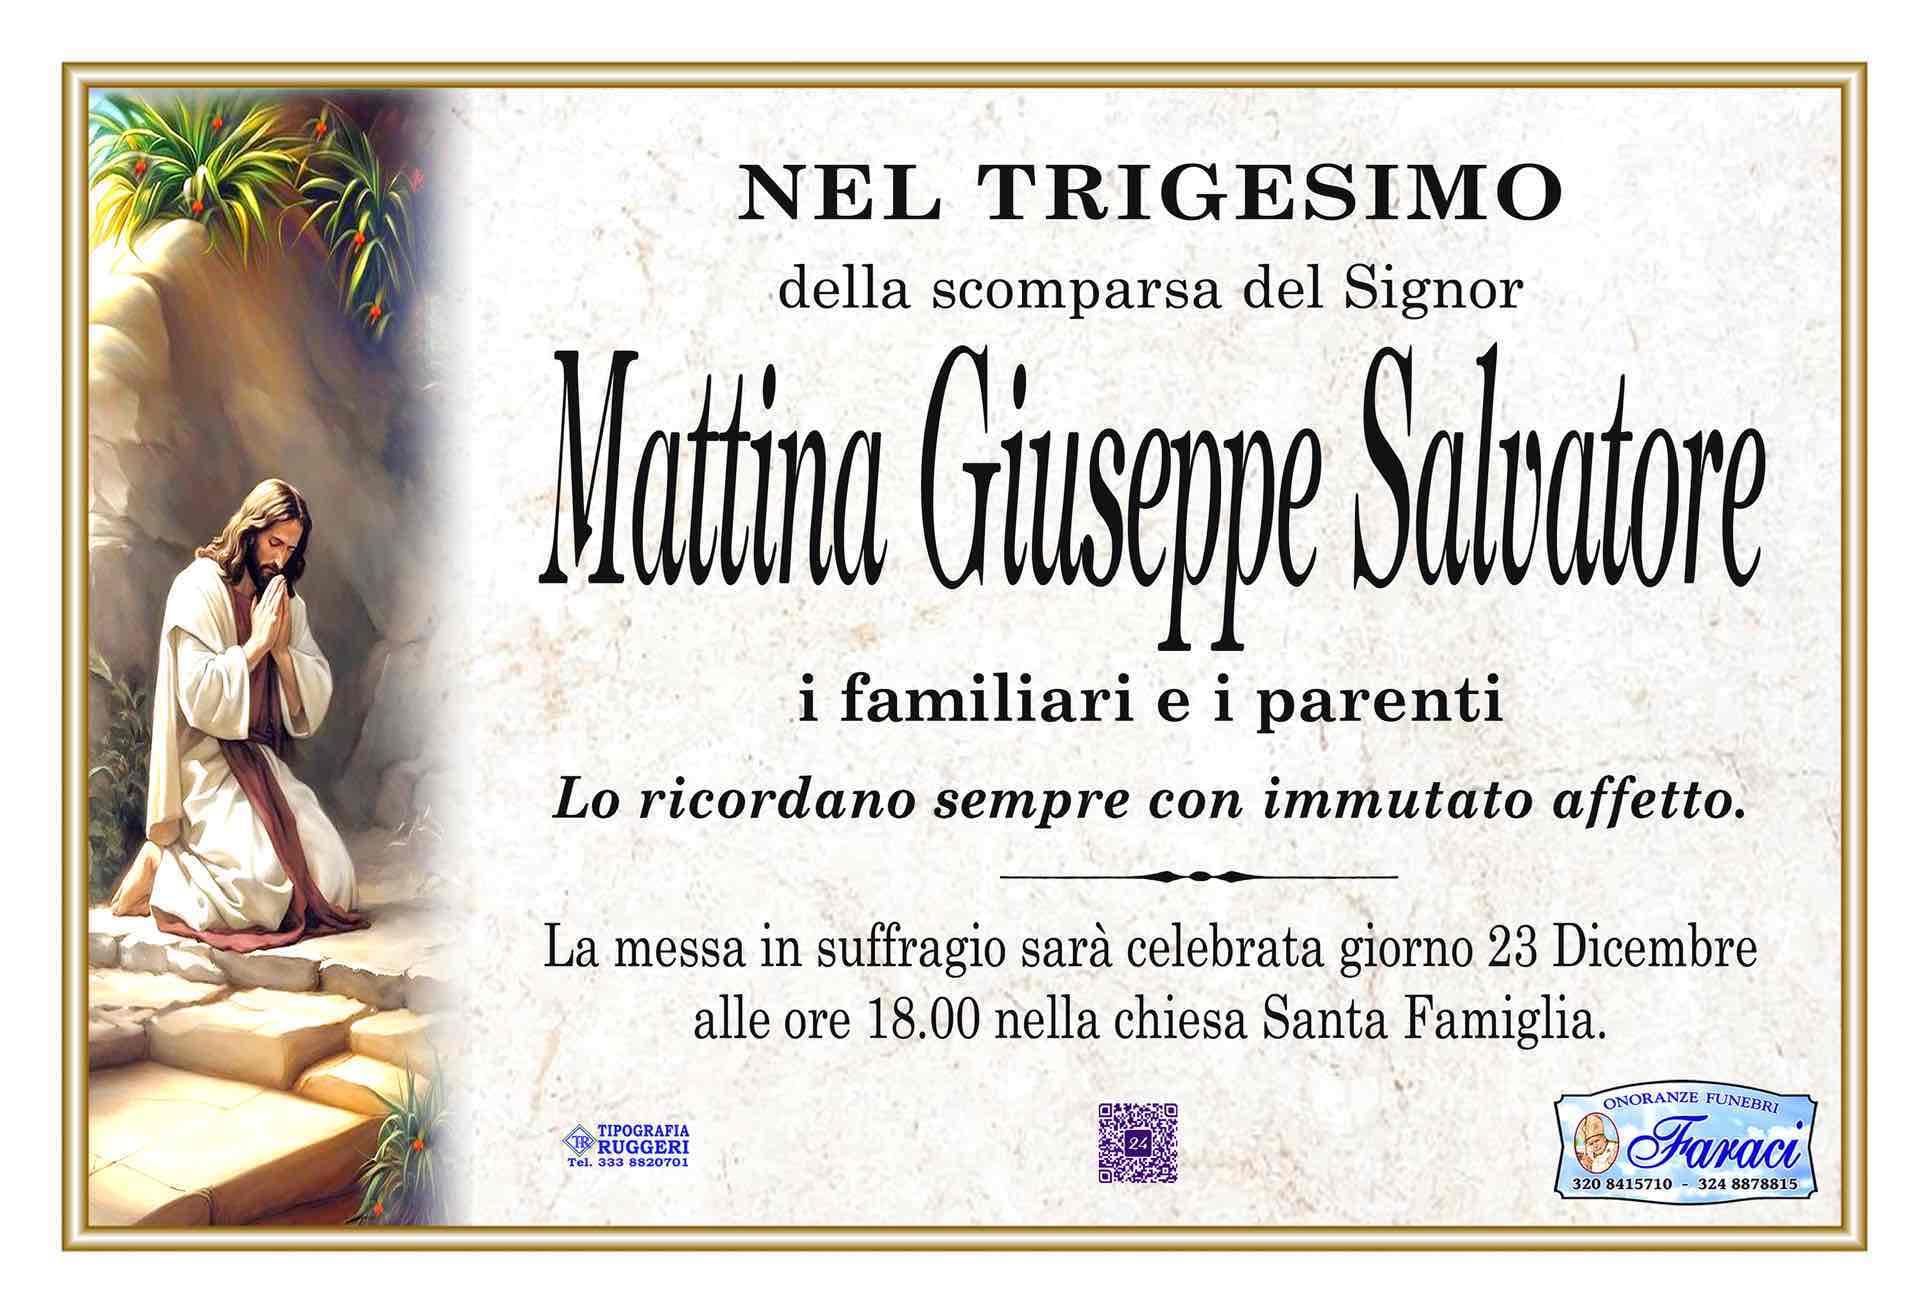 Giuseppe Salvatore Mattina